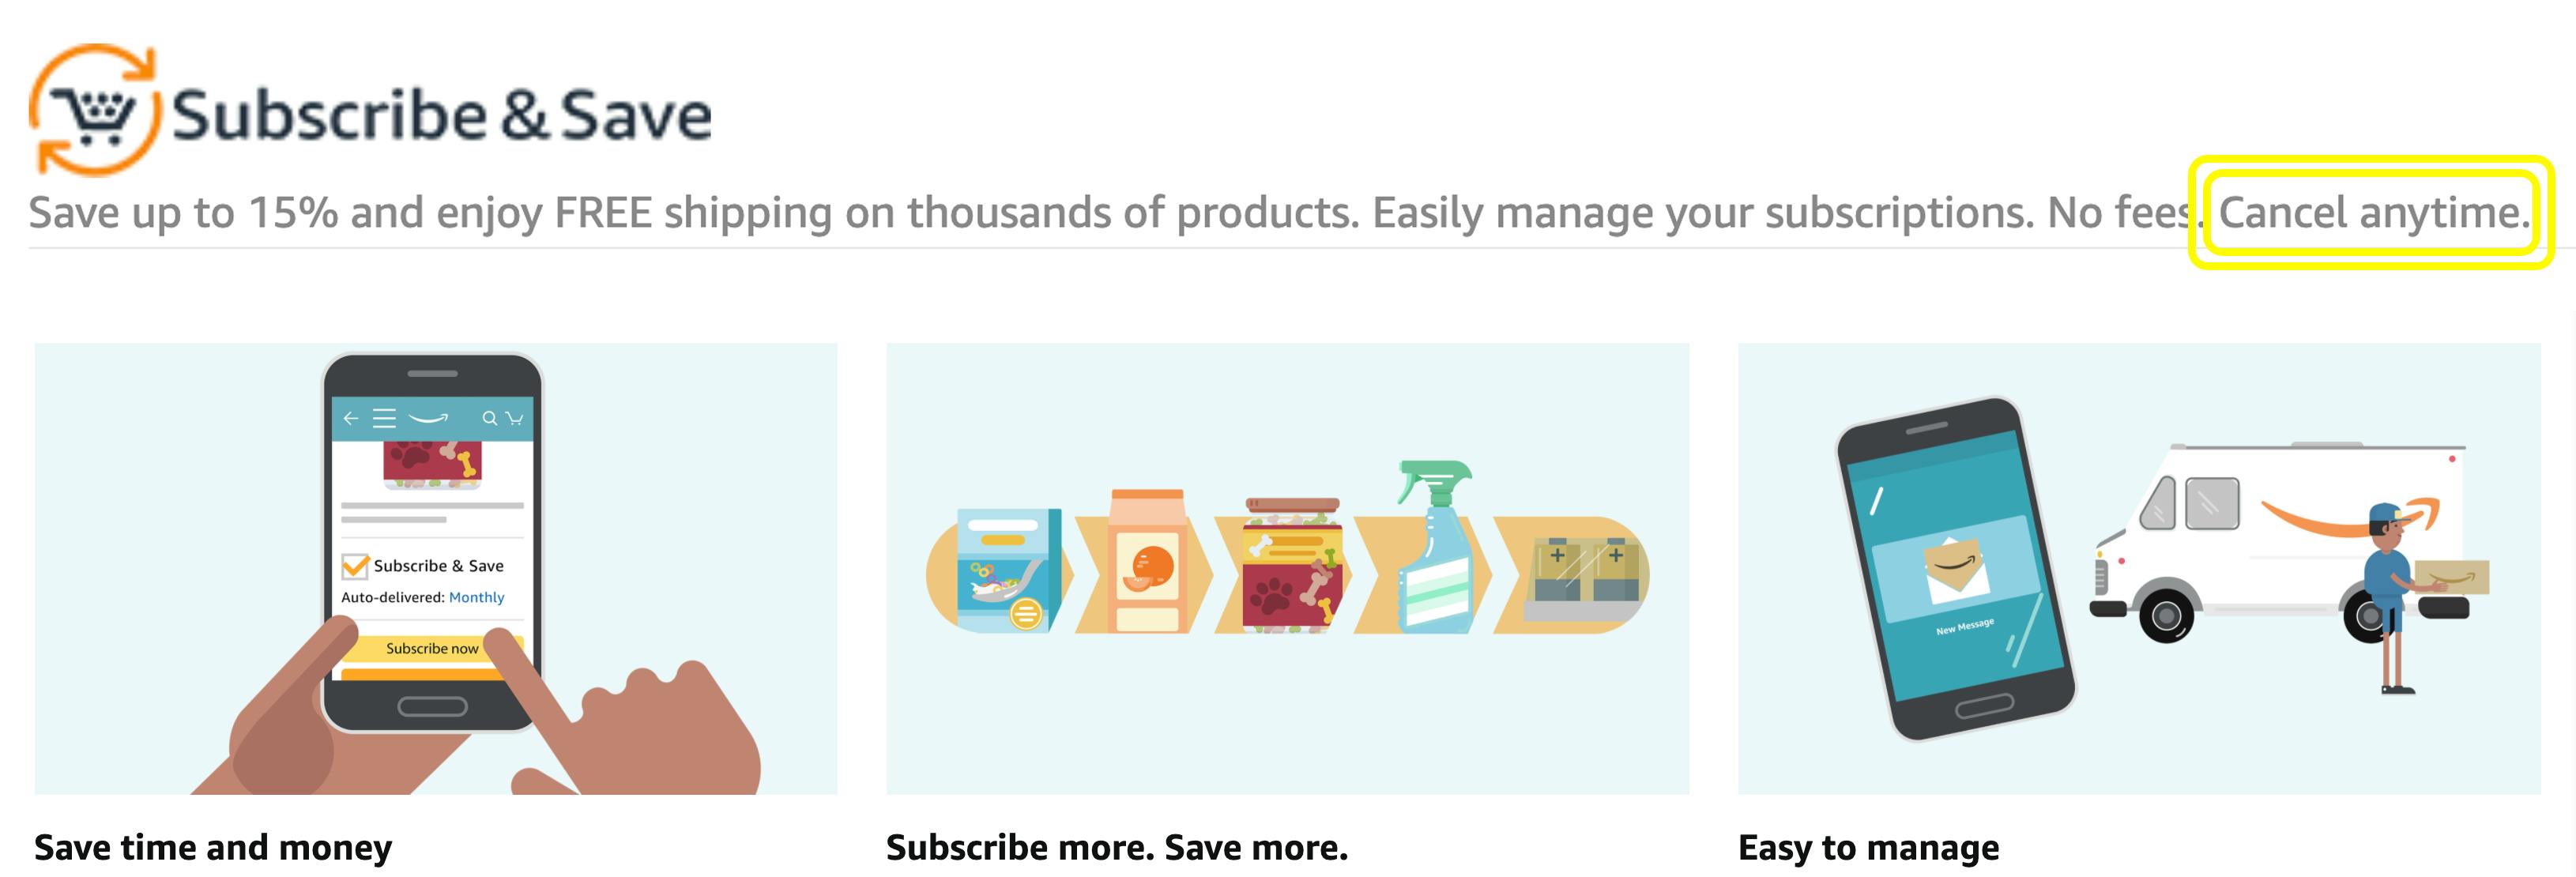 Amazon subscribe and save screenshot